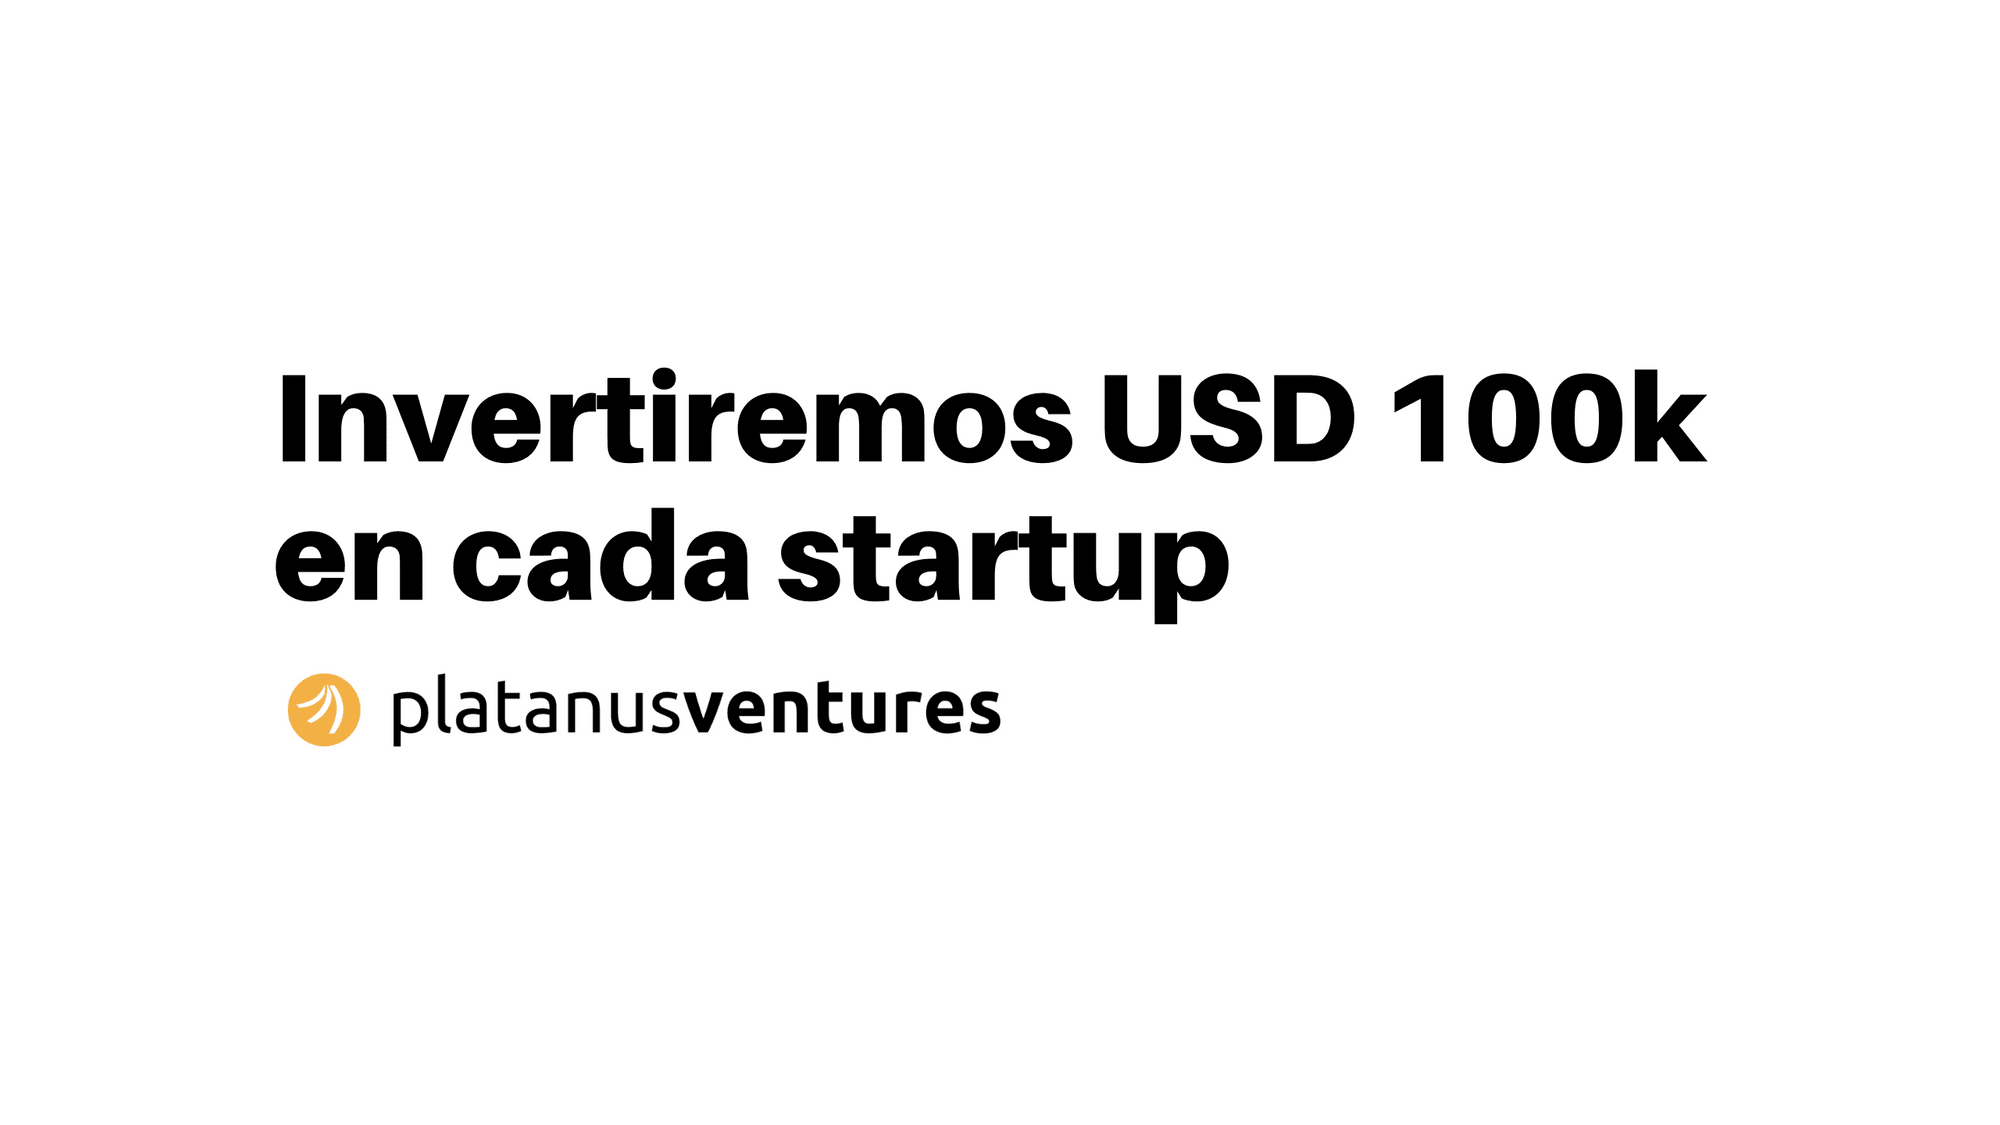 En Platanus Ventures invertiremos USD 100k en cada startup